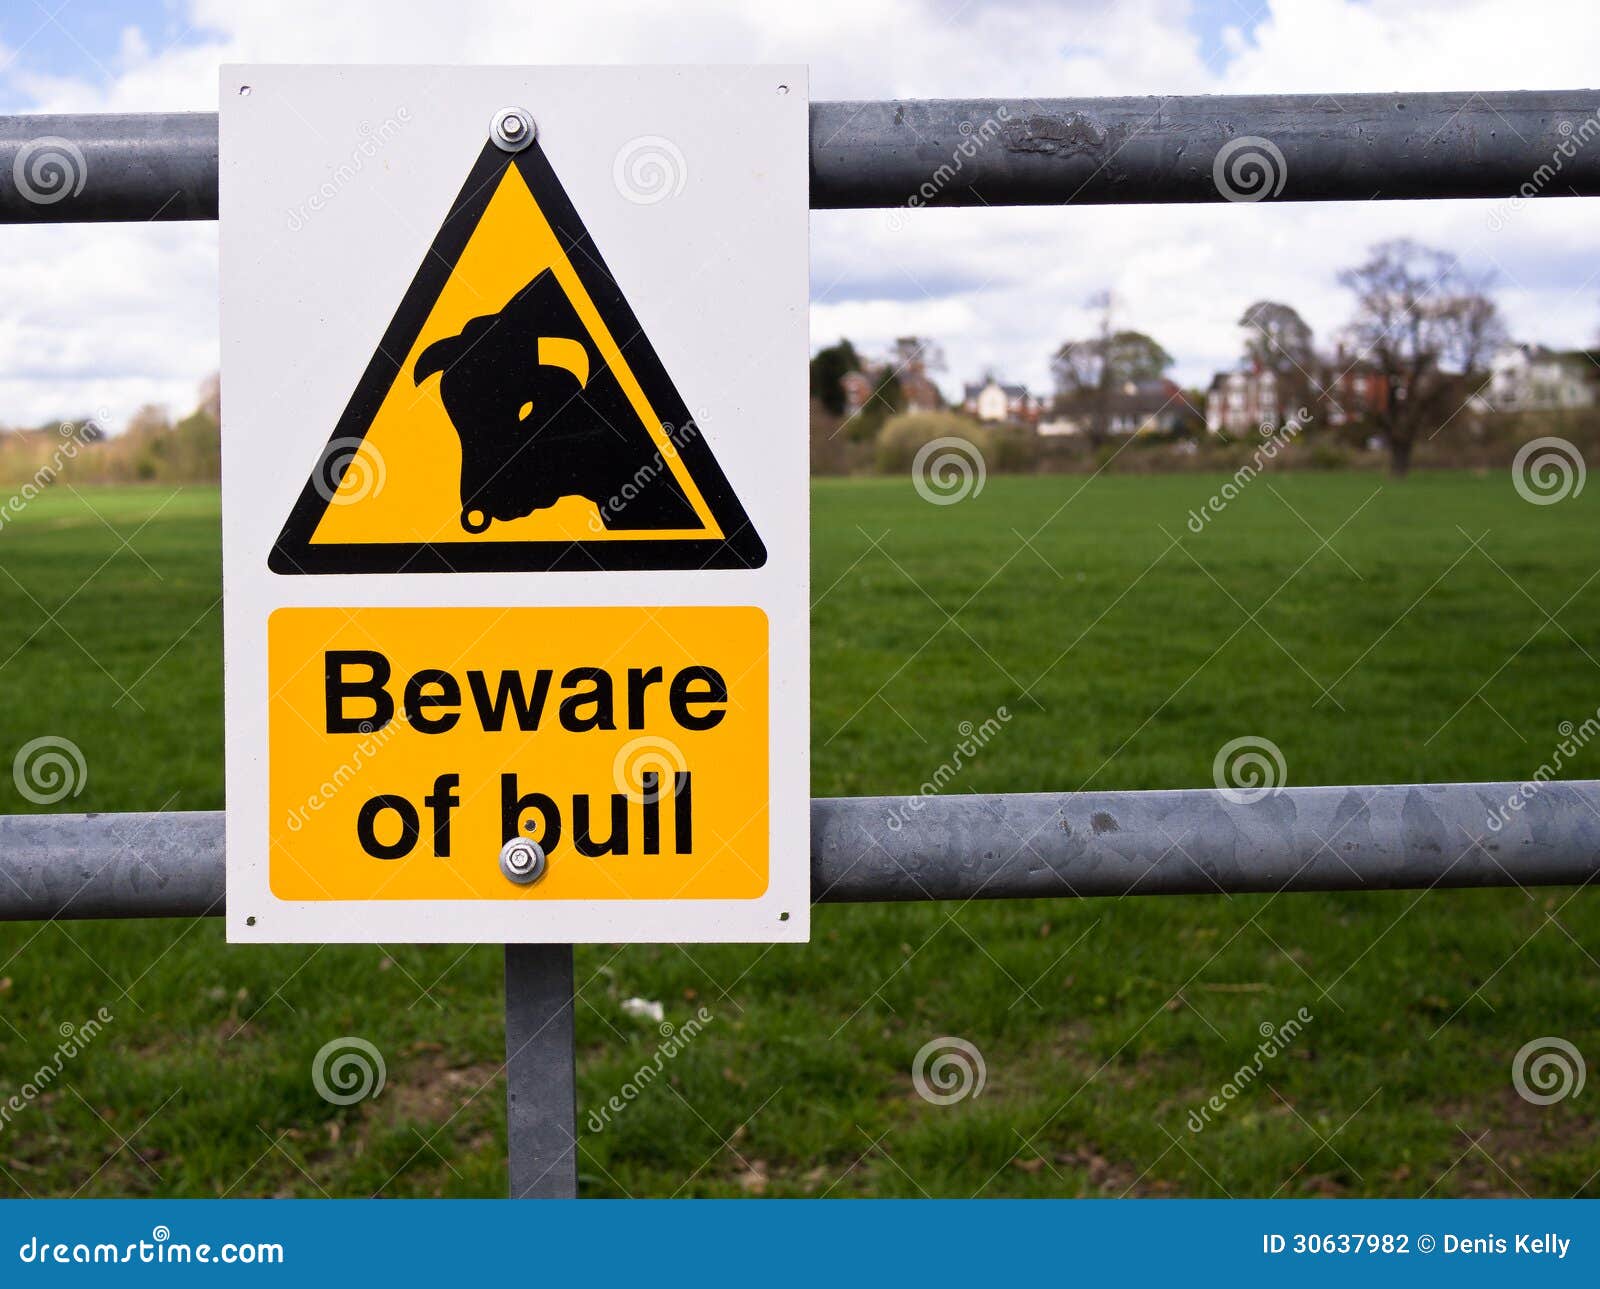 Farming Farm Hazard Danger Caution Sign Safety Bull in field Health